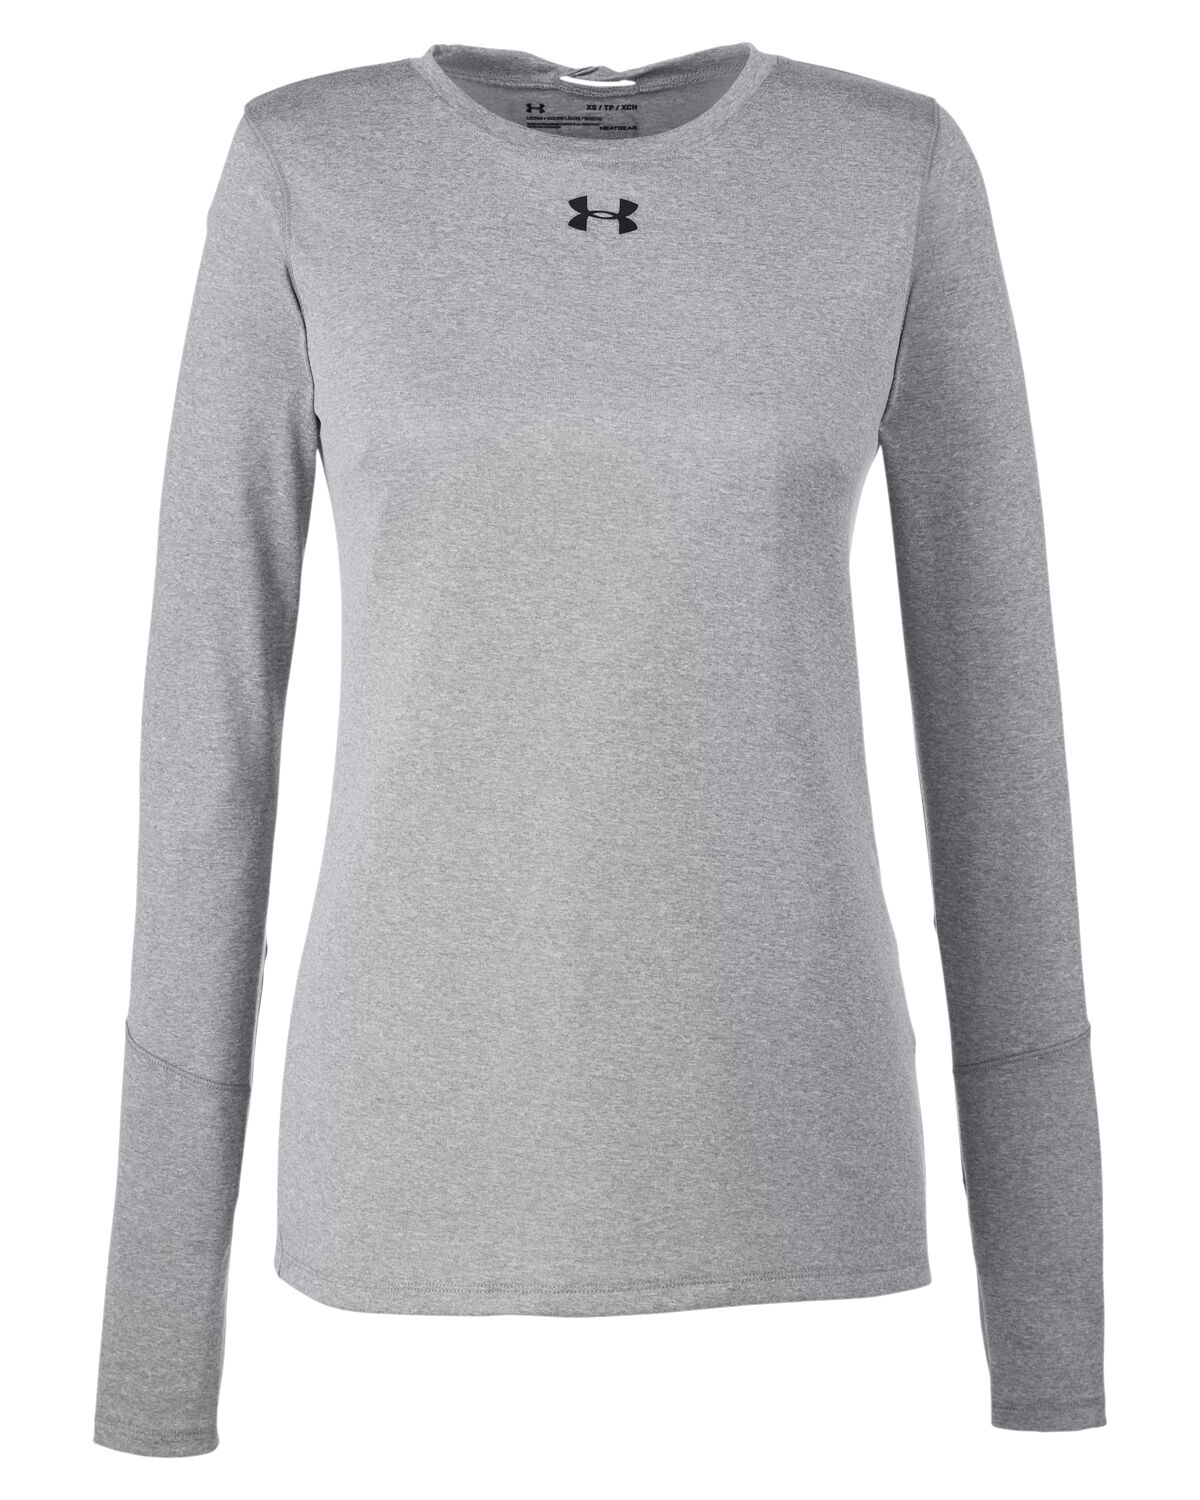 Branded Under Armour Ladies’ Long-Sleeve Locker T-Shirt 2.0 True Grey Heather/Black